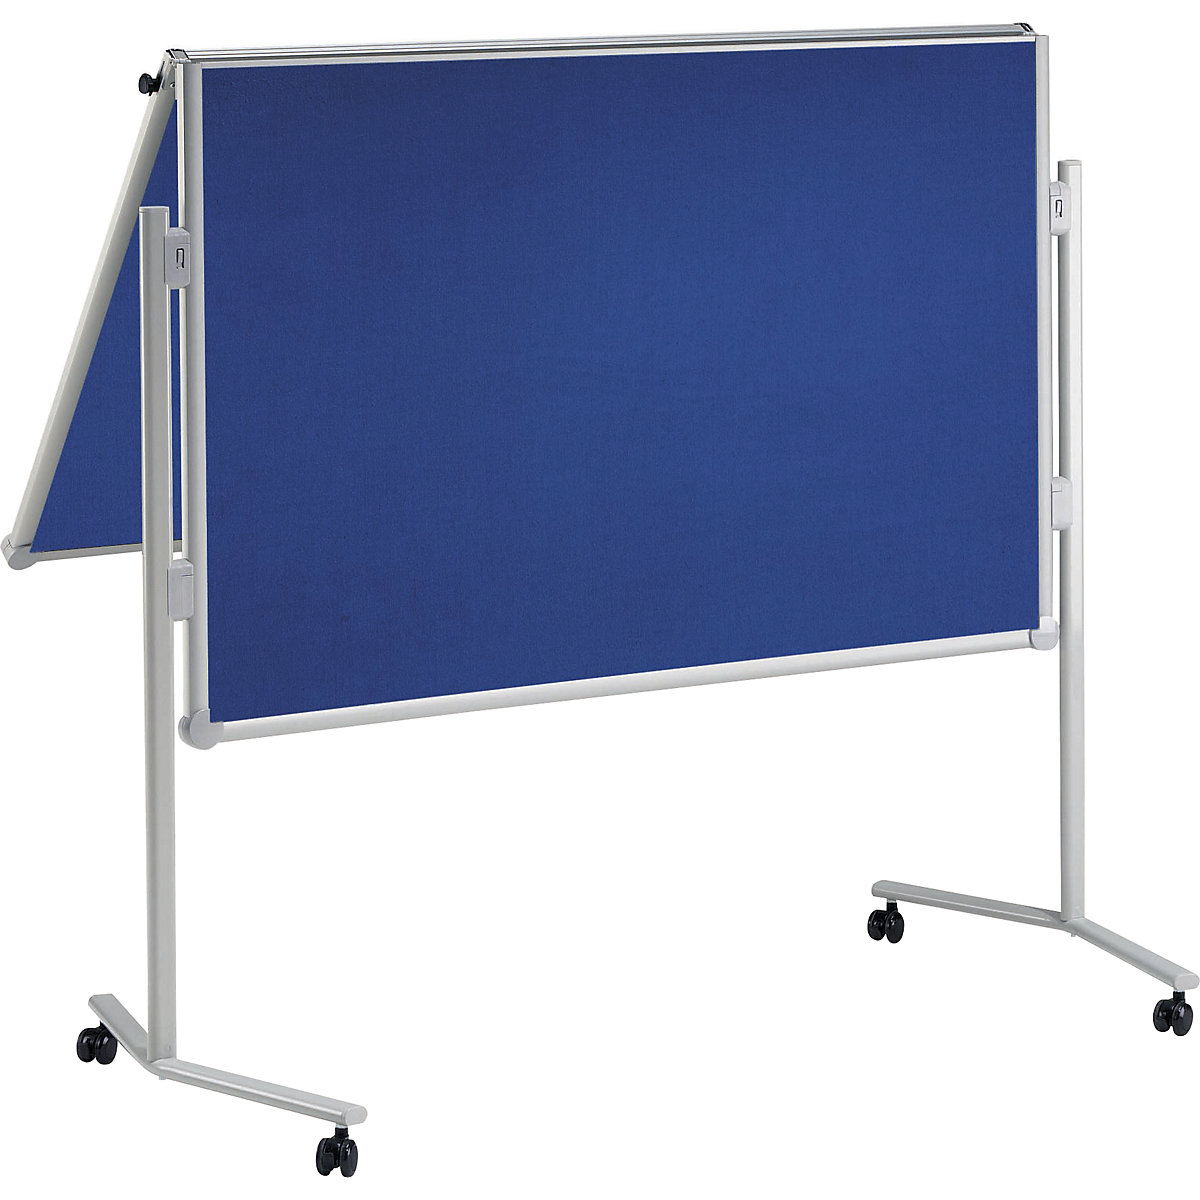 Presentatiebord MAULpro, inklapbaar – MAUL, oppervlak van textiel, blauw, b x h = 1200 x 1500 mm-8